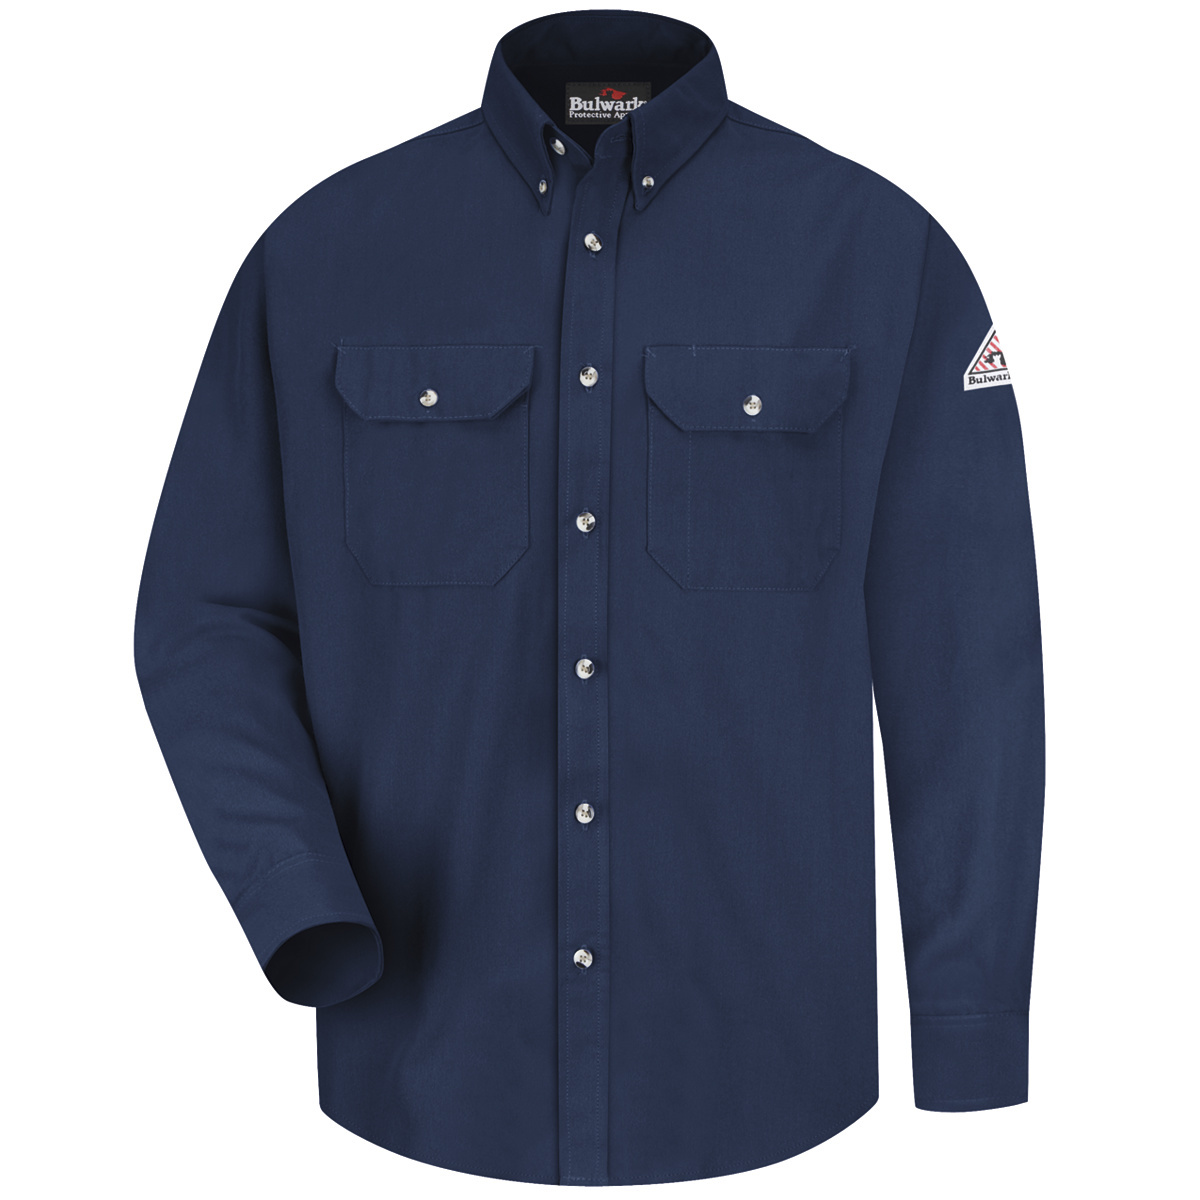 Bulwark® Small| Regular Navy Blue Modacrylic/Lyocell/Aramid Flame Resistant Dress Uniform Shirt With Button Front Closure